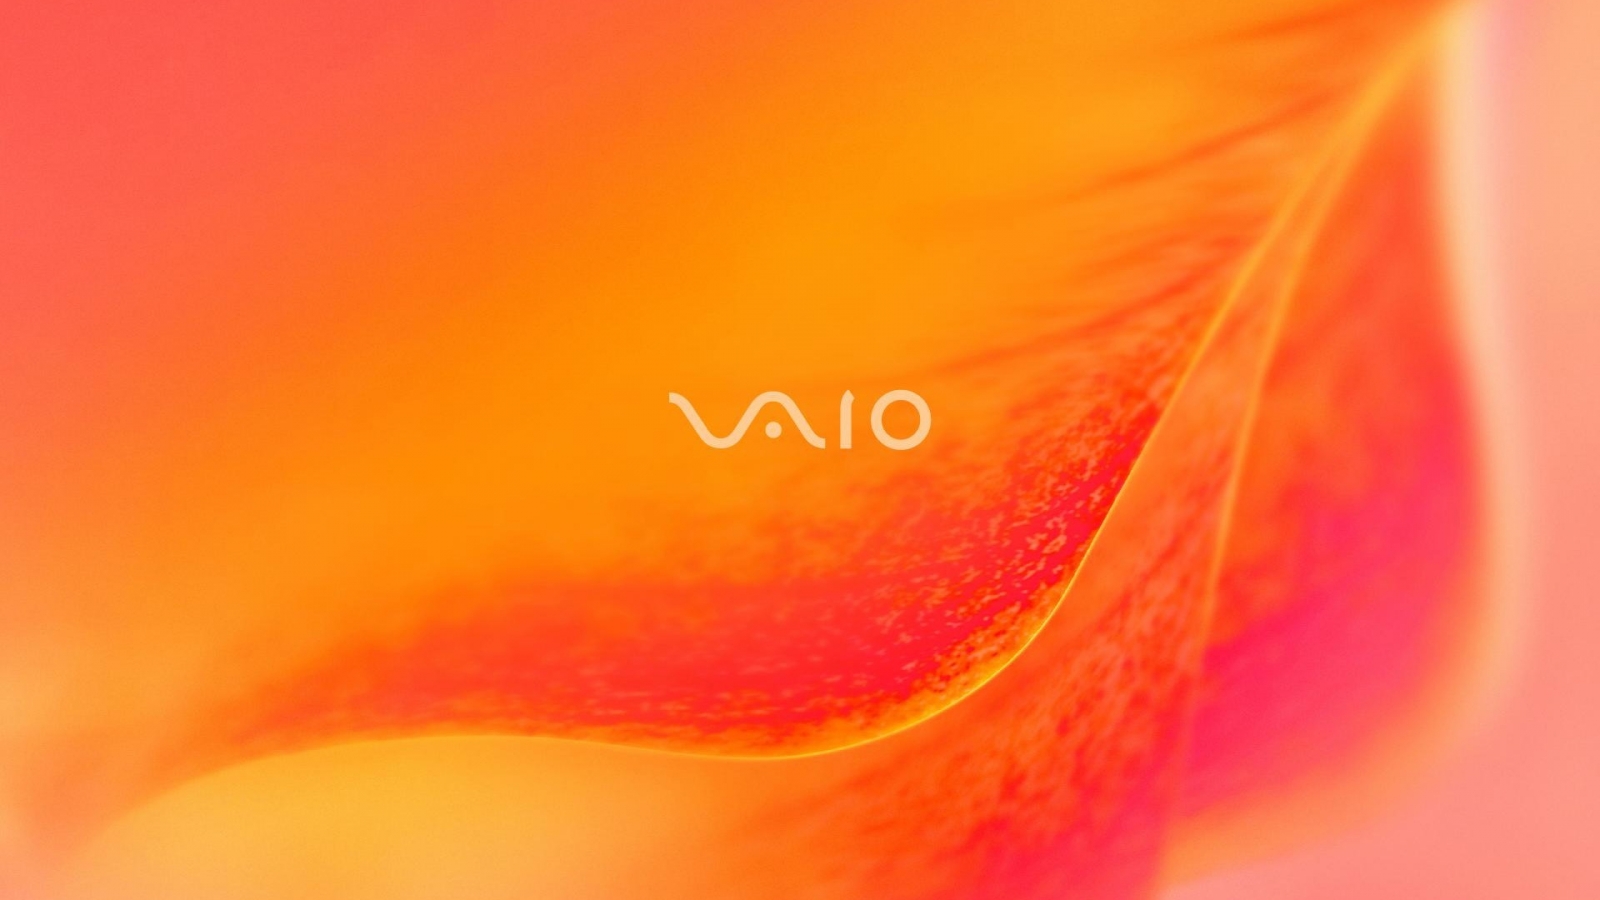 Sony Vaio Orange blossom for 1600 x 900 HDTV resolution